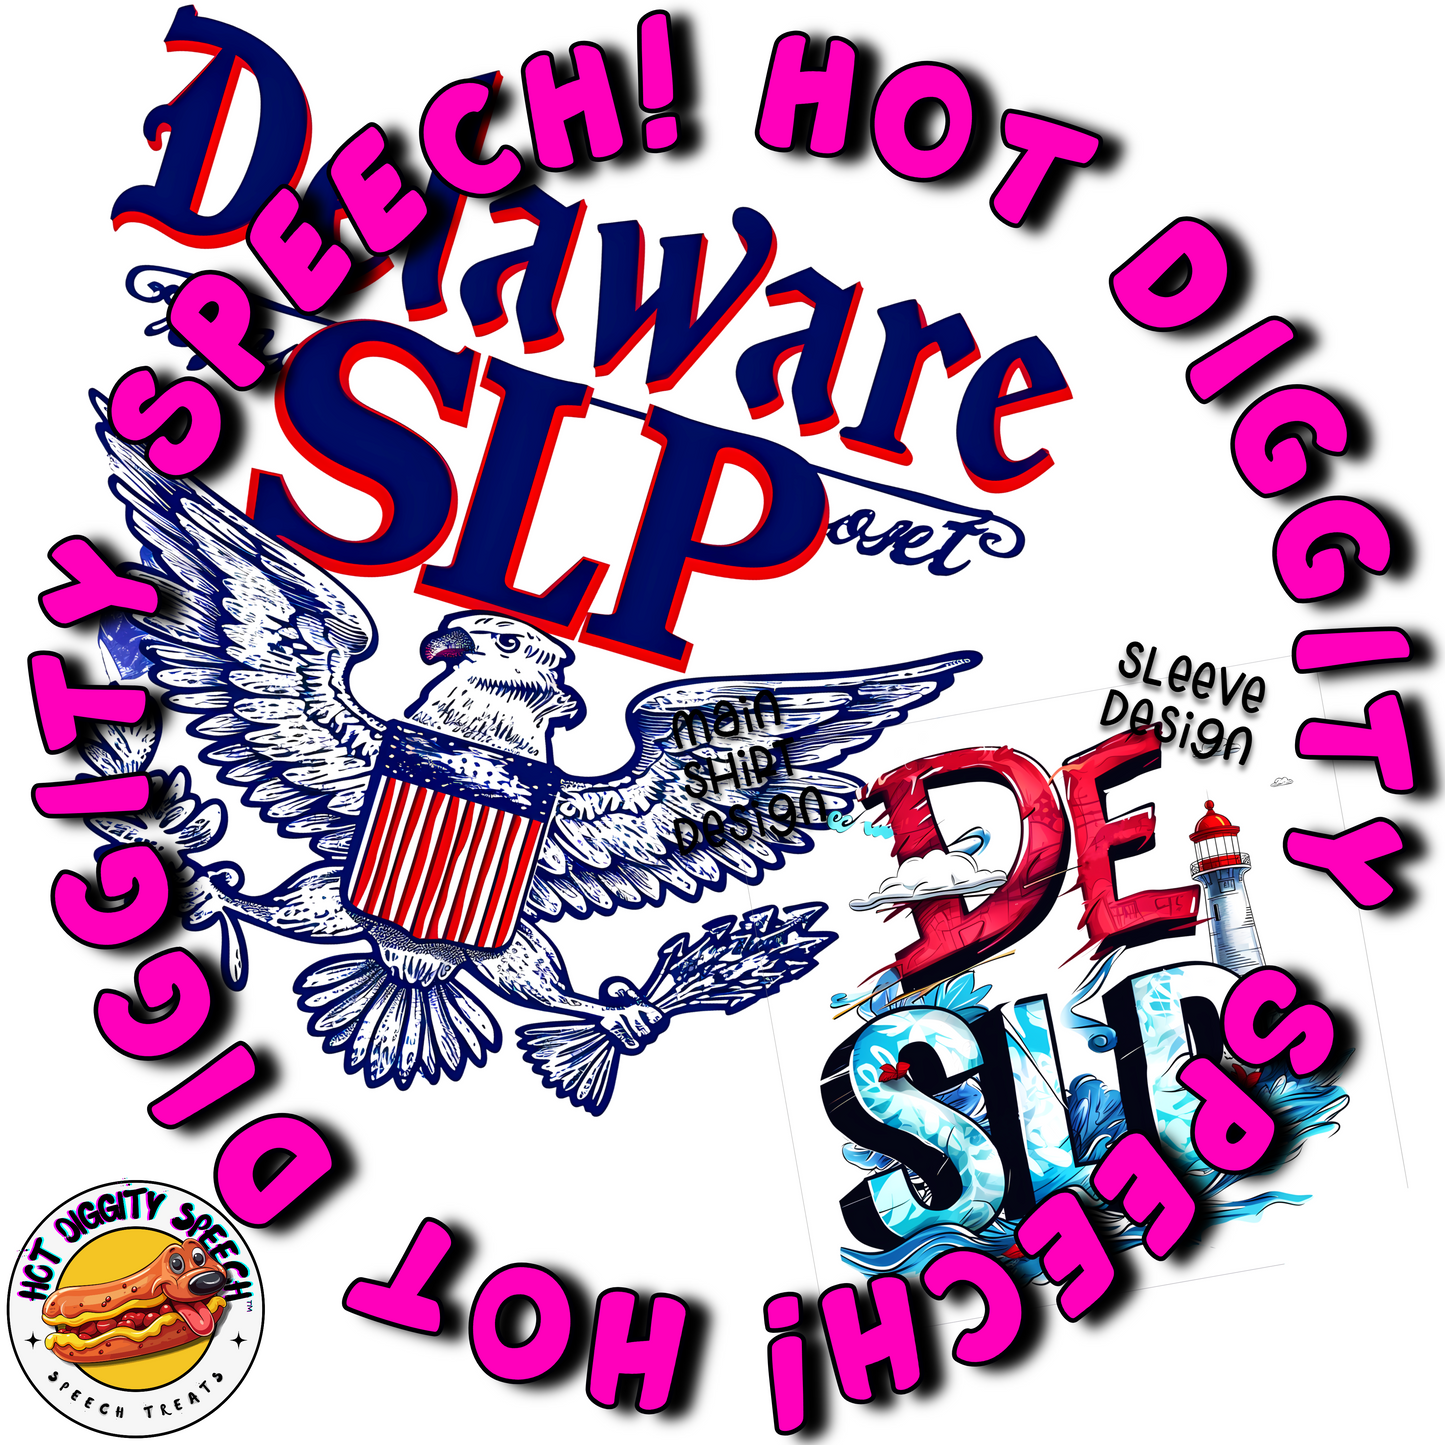 Delaware SLP #2 Speech Therapy Shirt